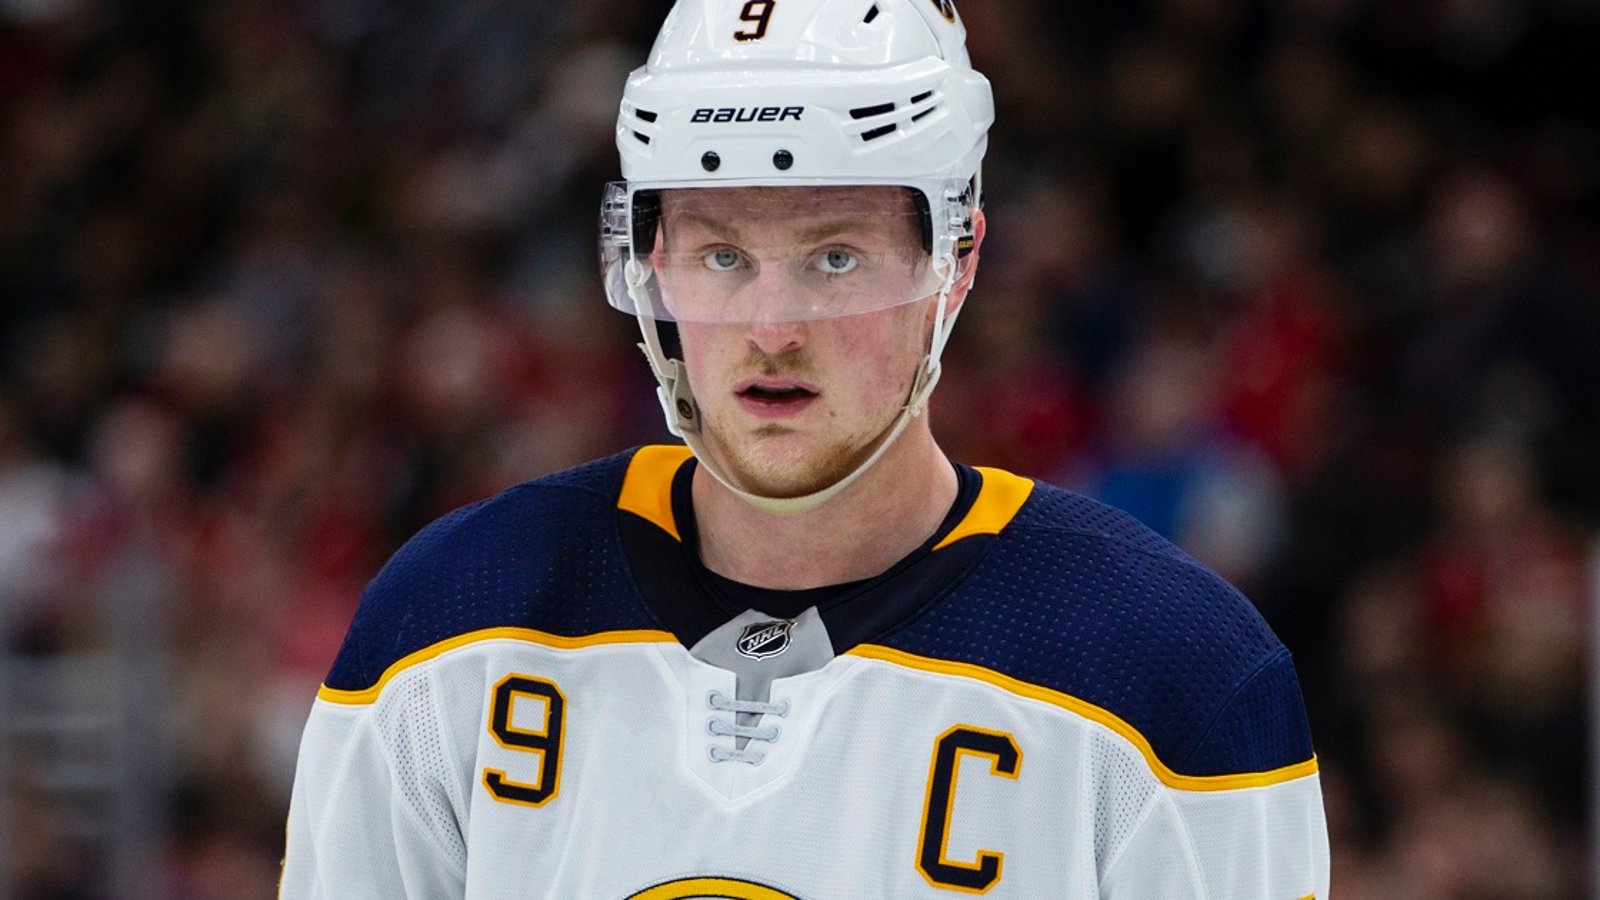 Insider proposes blockbuster trade between the Bruins and Sabres for Jack Eichel.